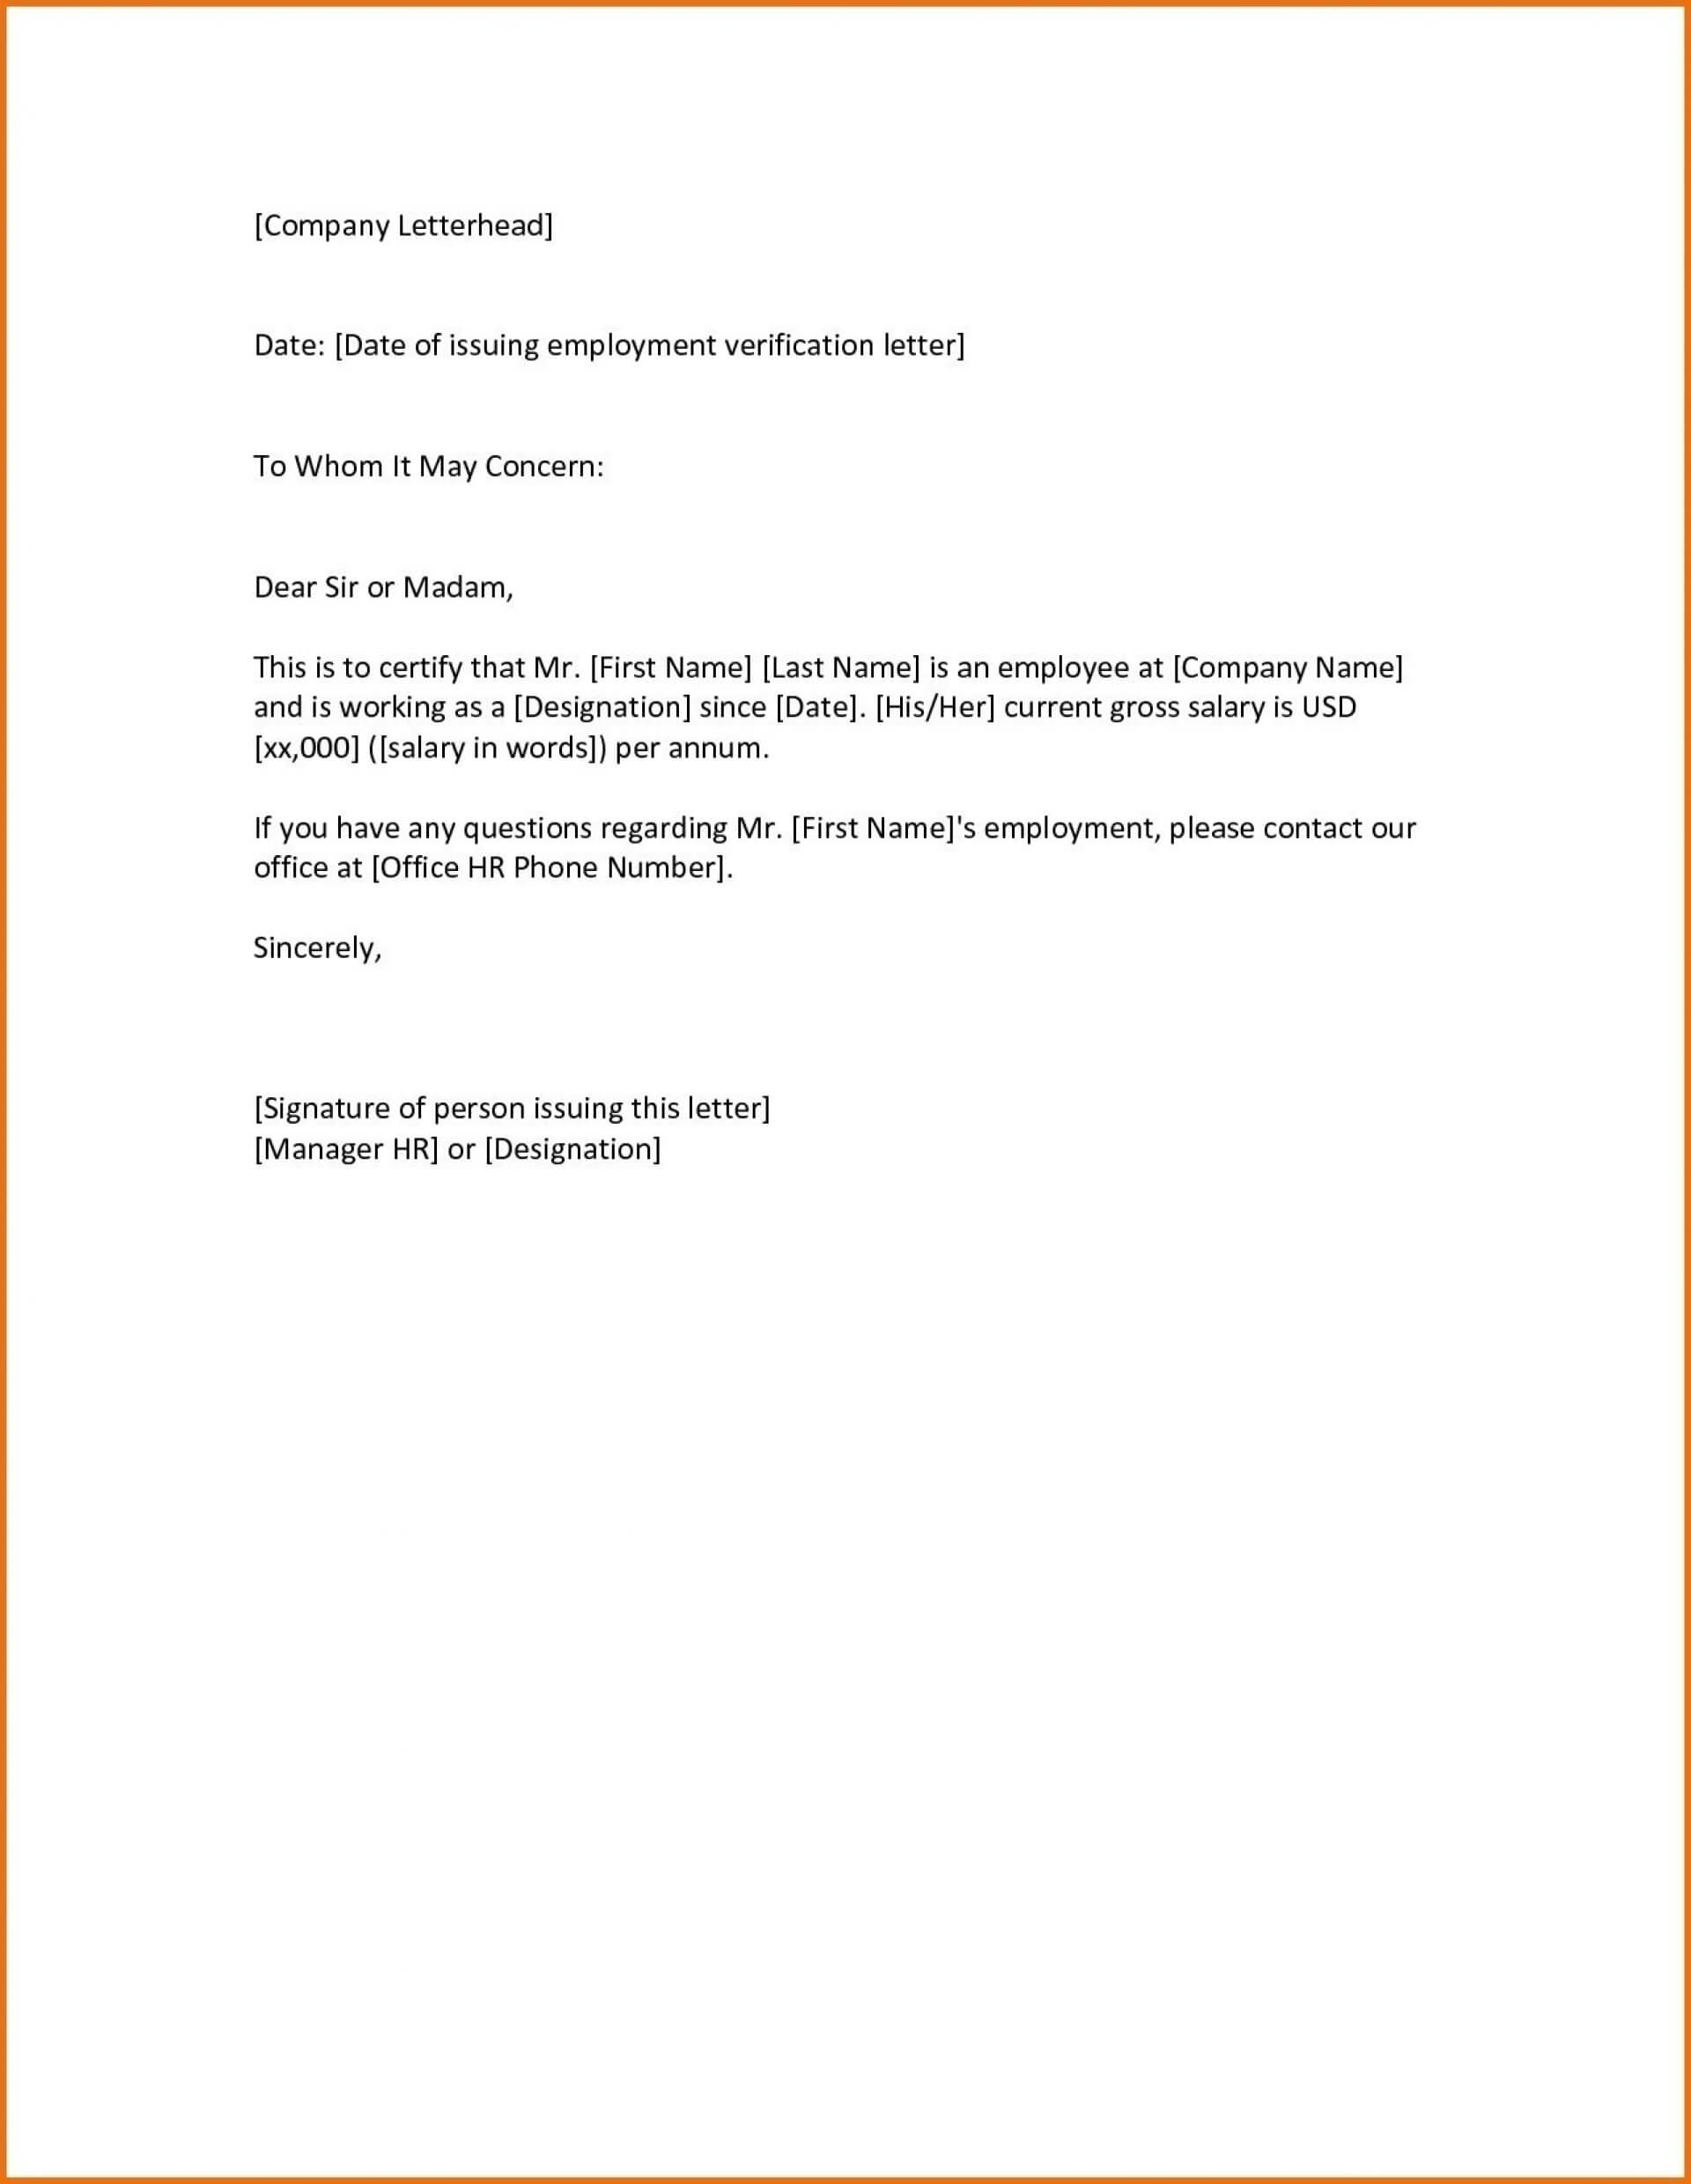 013 Employment Verification Letter Template Word Free Ideas With Regard To Employment Verification Letter Template Word